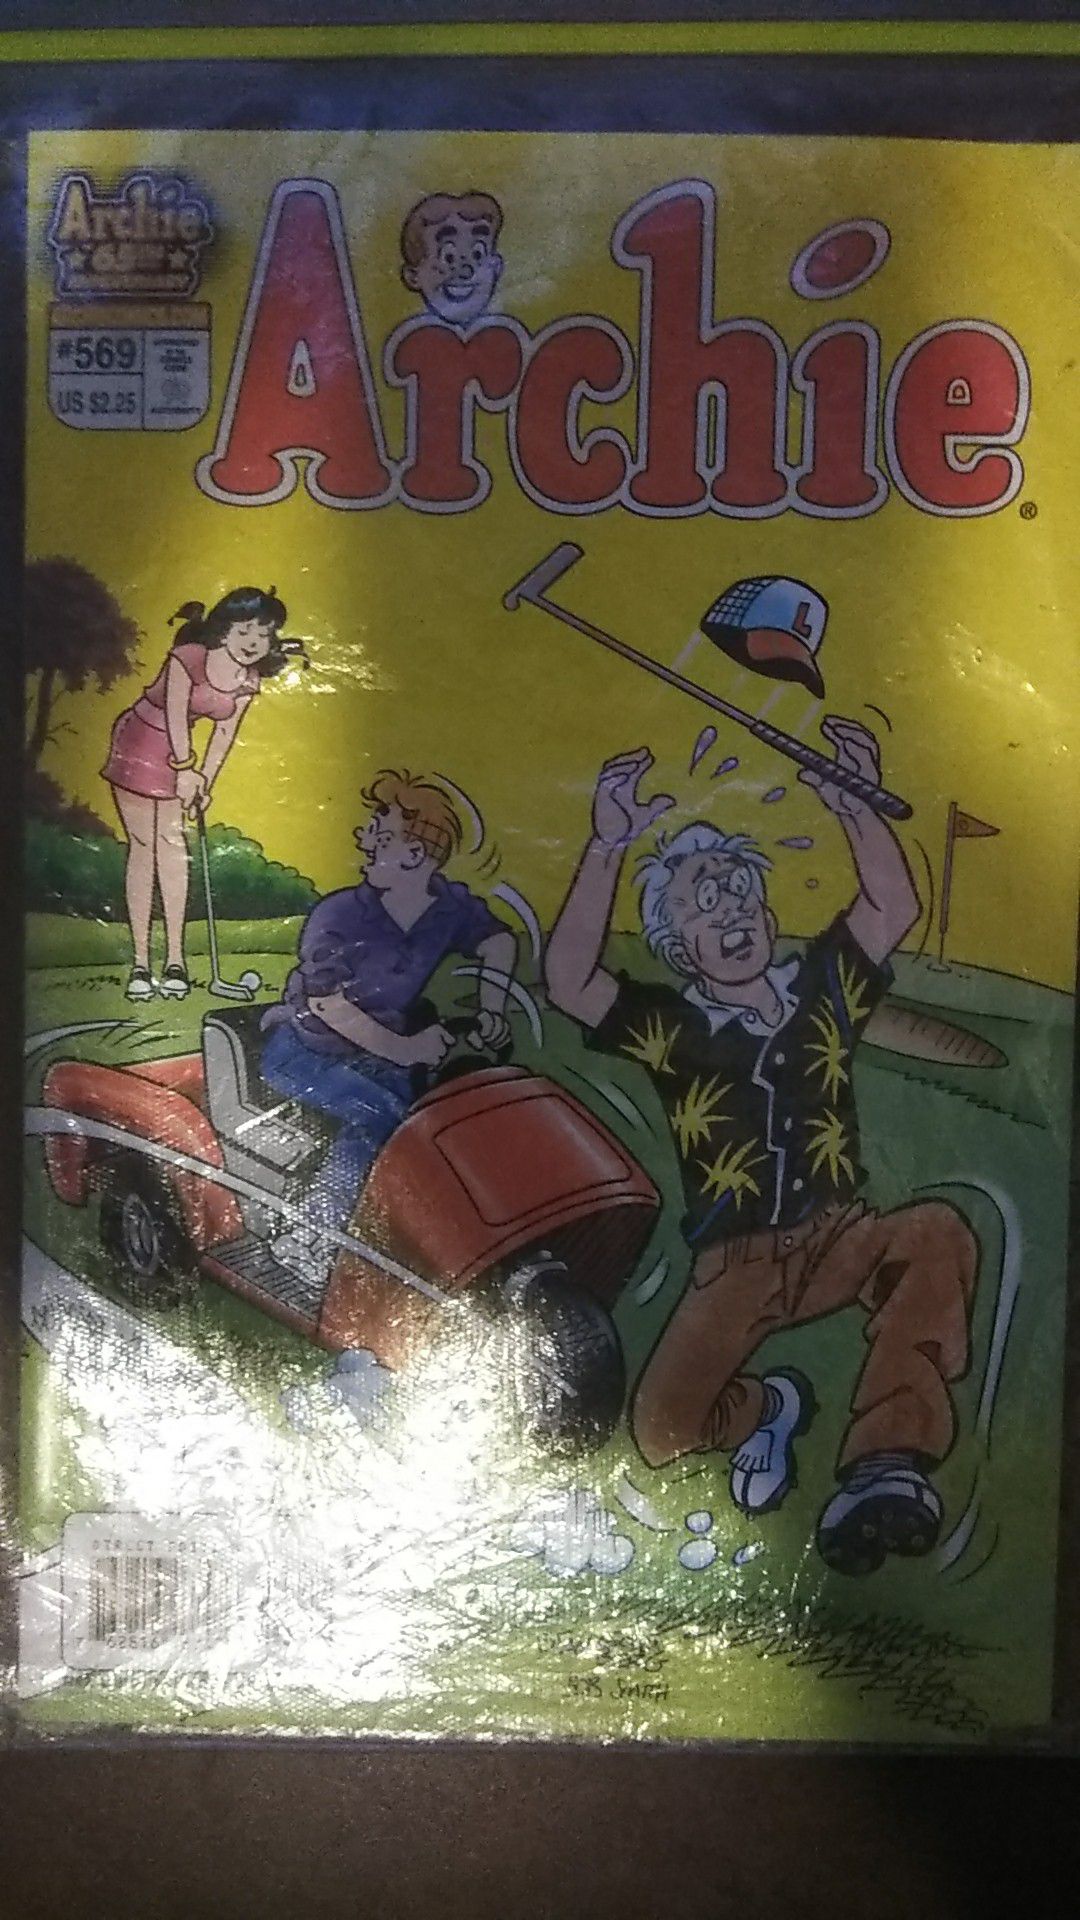 Archie #569 comic